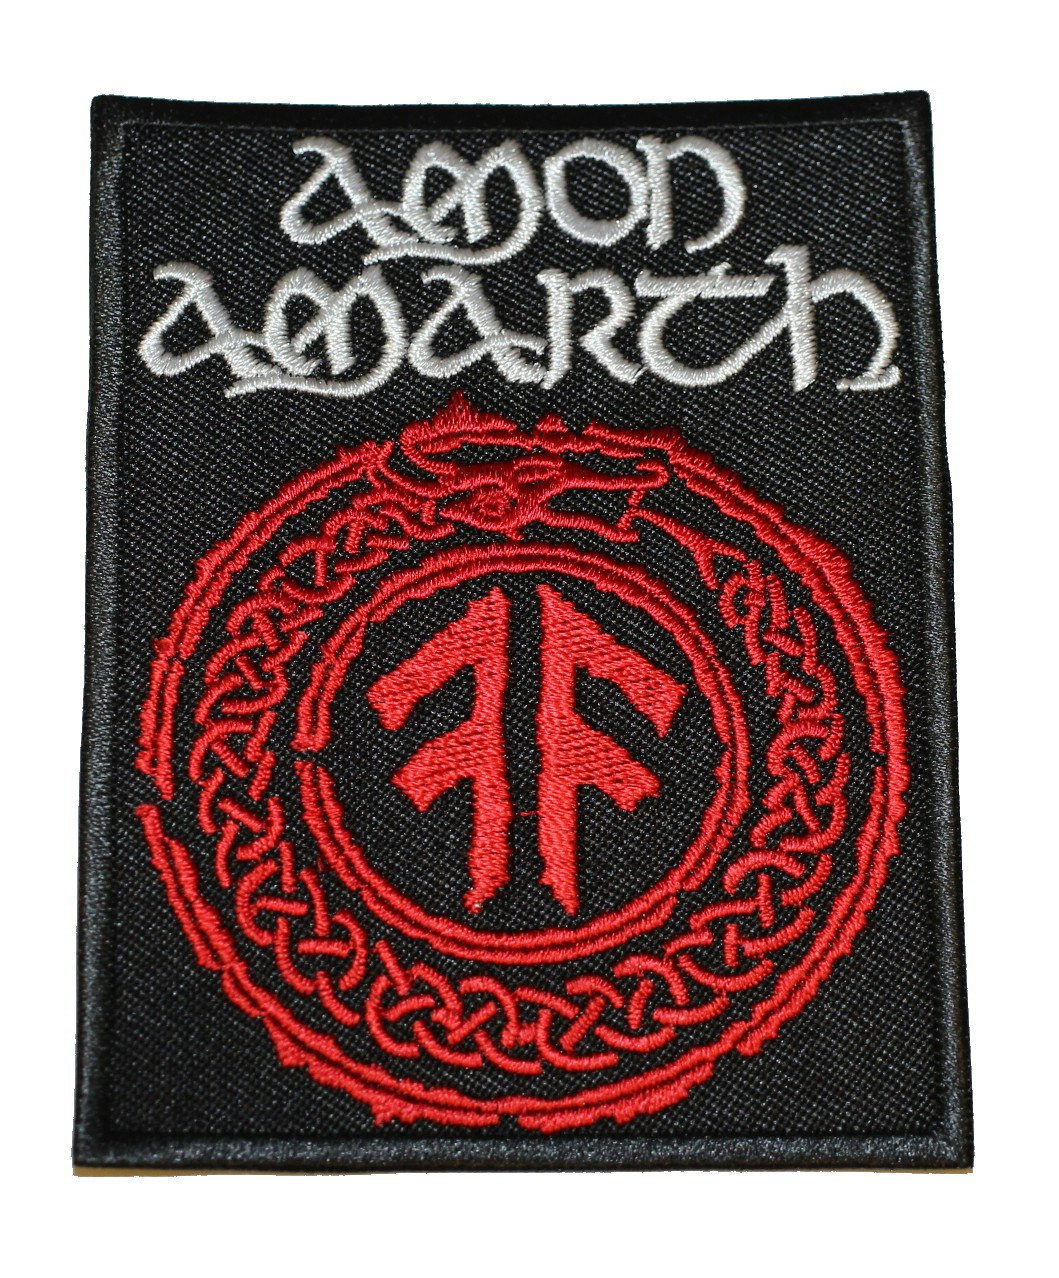 Amon amarth  logo patch